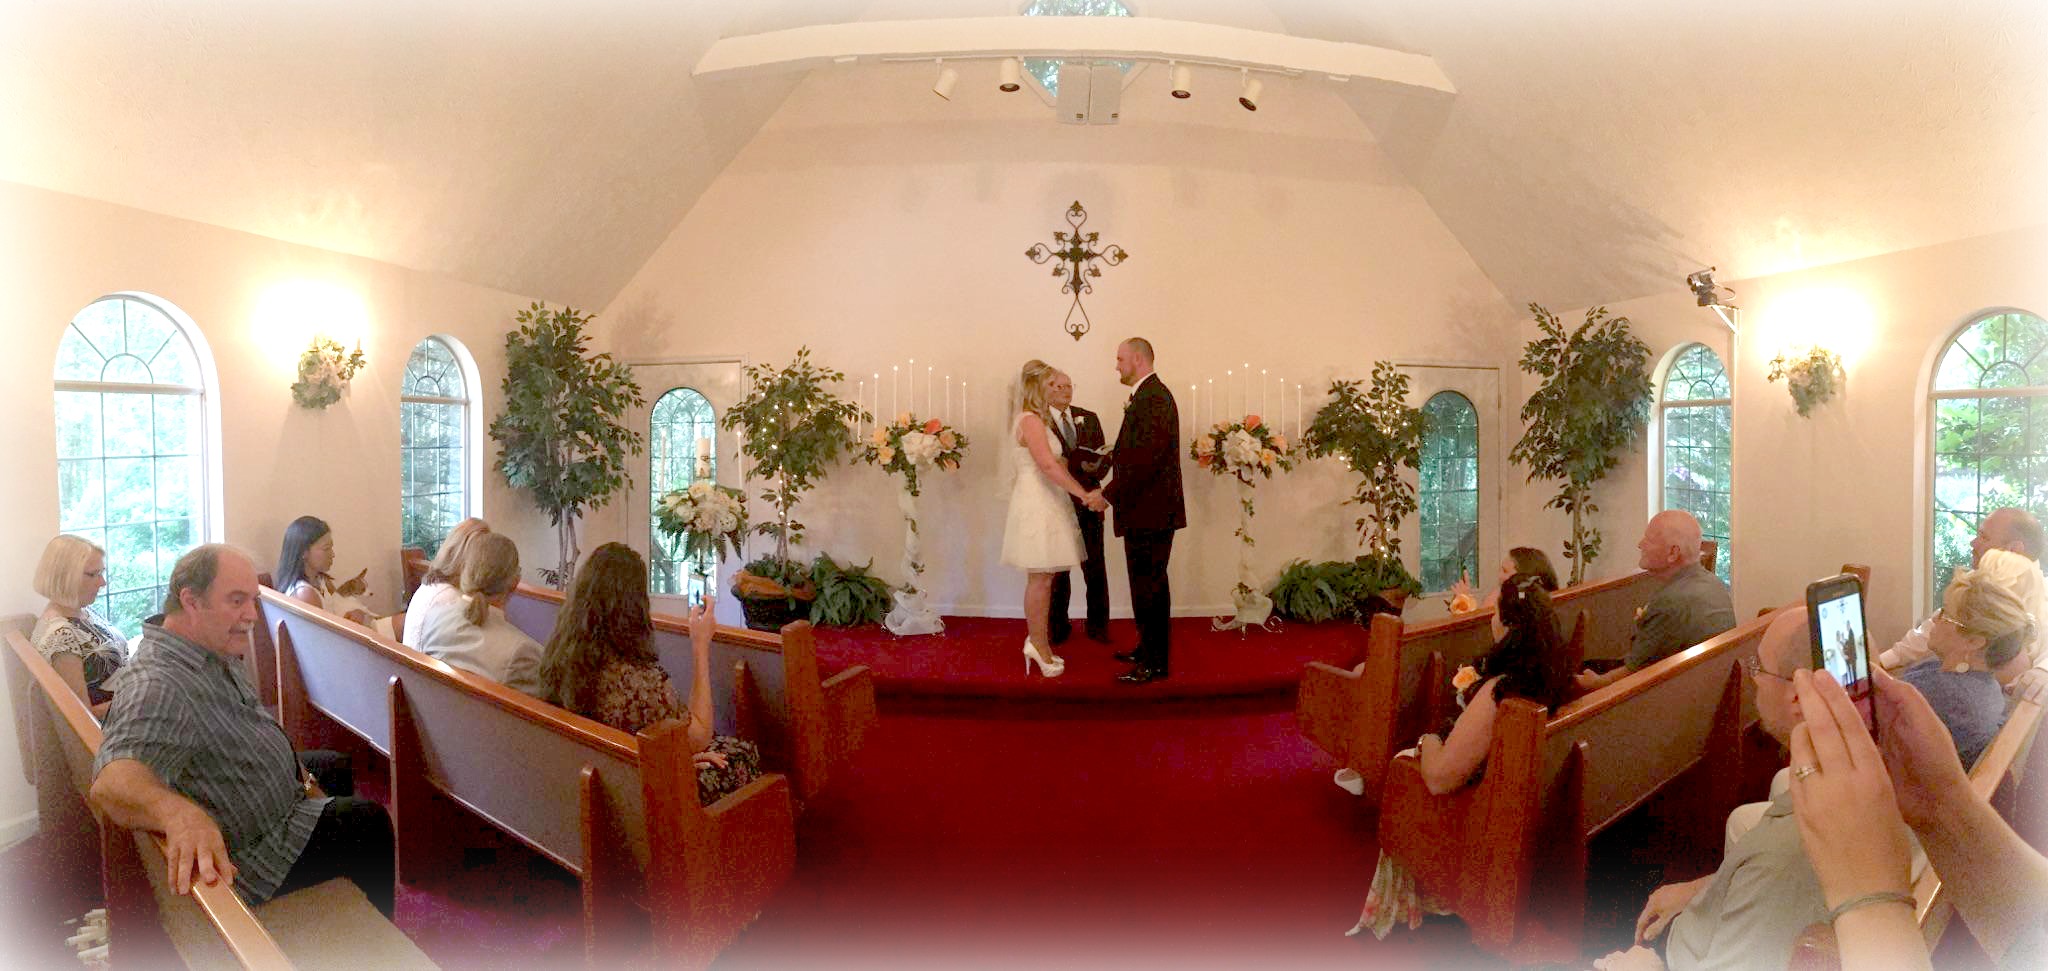 Smoky Mountain Wedding Chapels Just Another Wordpress Weblog